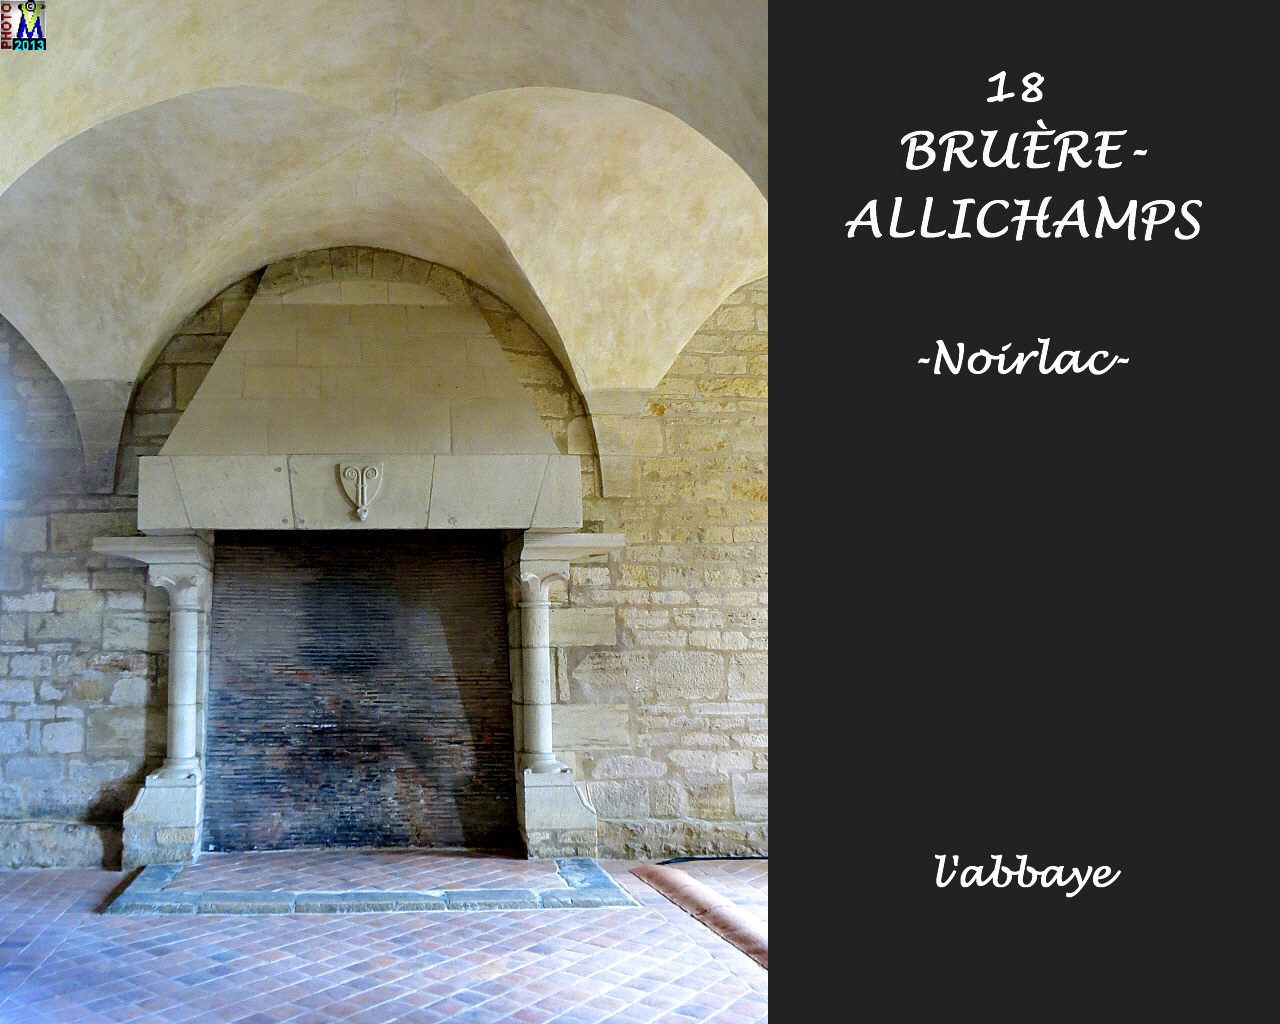 18BRUERE-ALLICHAMPSzNOIRLAC_abbaye_292.jpg